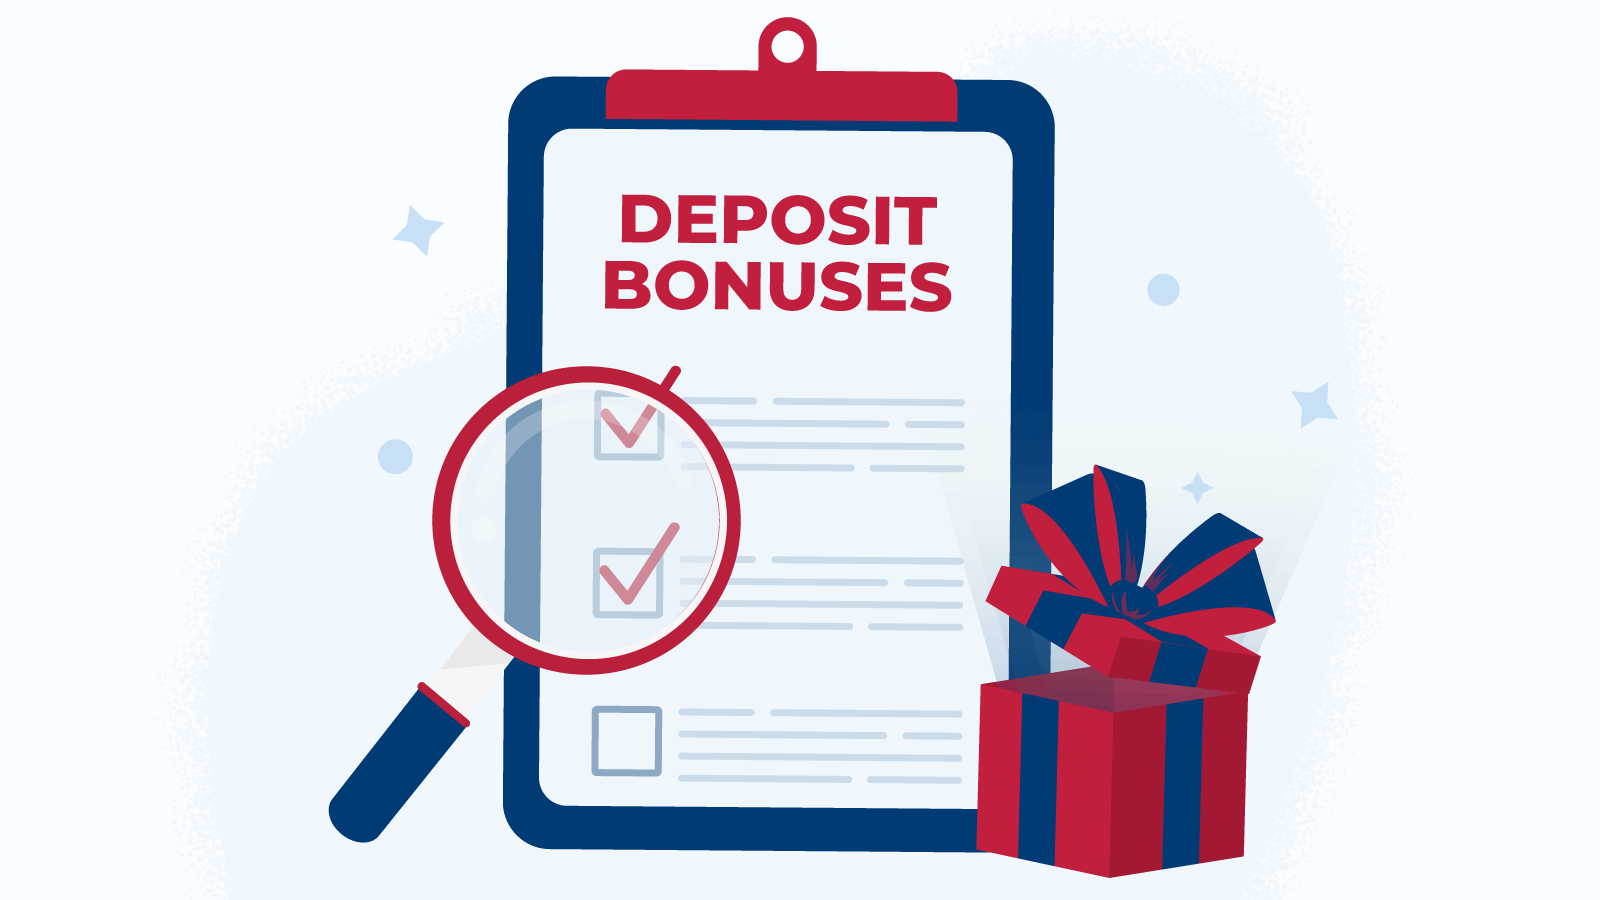 4.How we examine deposit casino bonuses